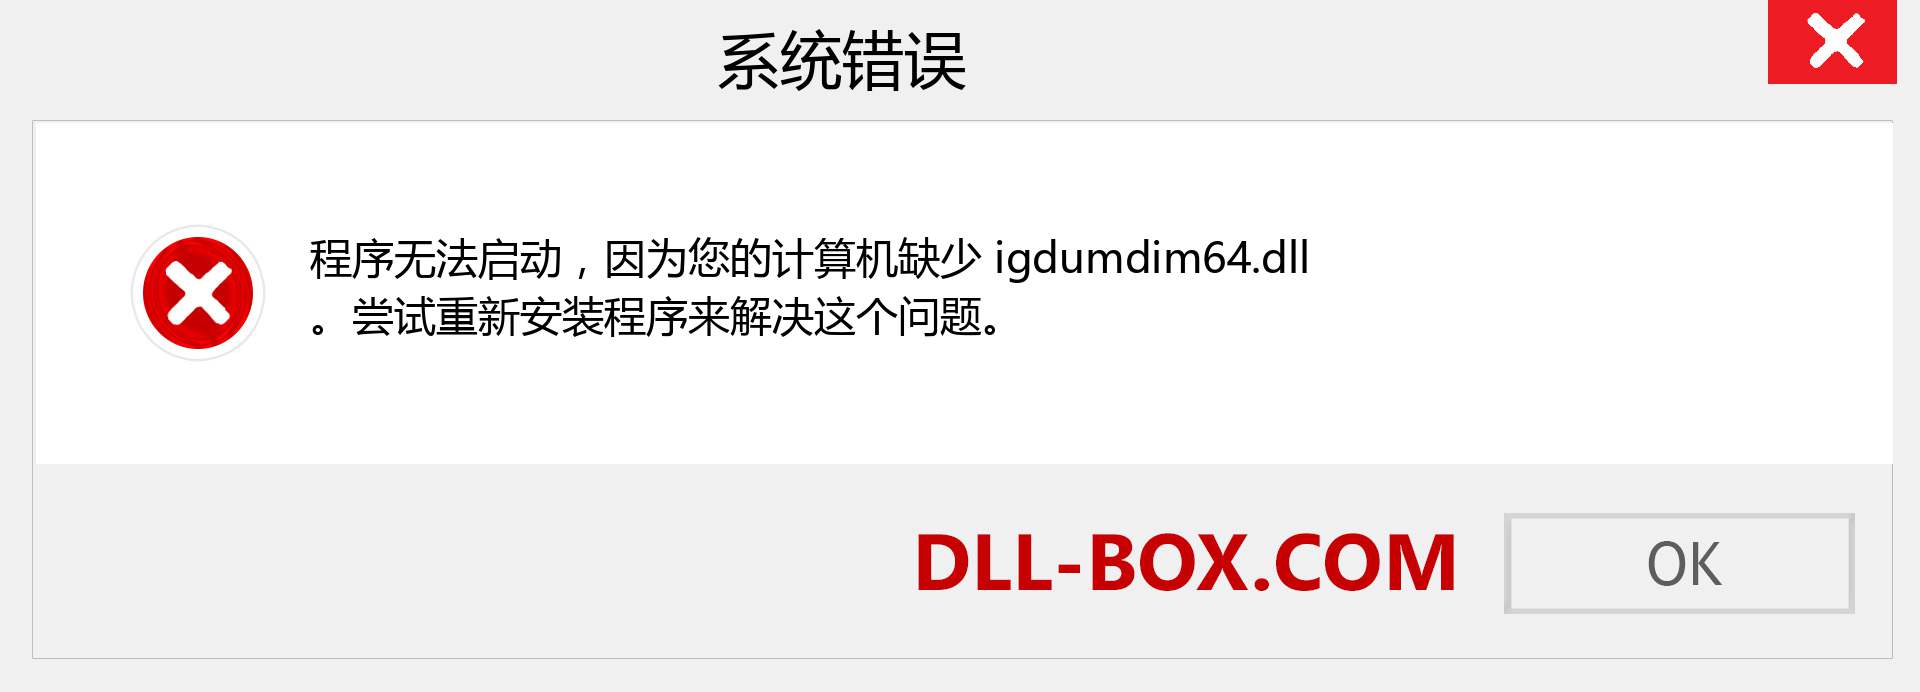 igdumdim64.dll 文件丢失？。 适用于 Windows 7、8、10 的下载 - 修复 Windows、照片、图像上的 igdumdim64 dll 丢失错误